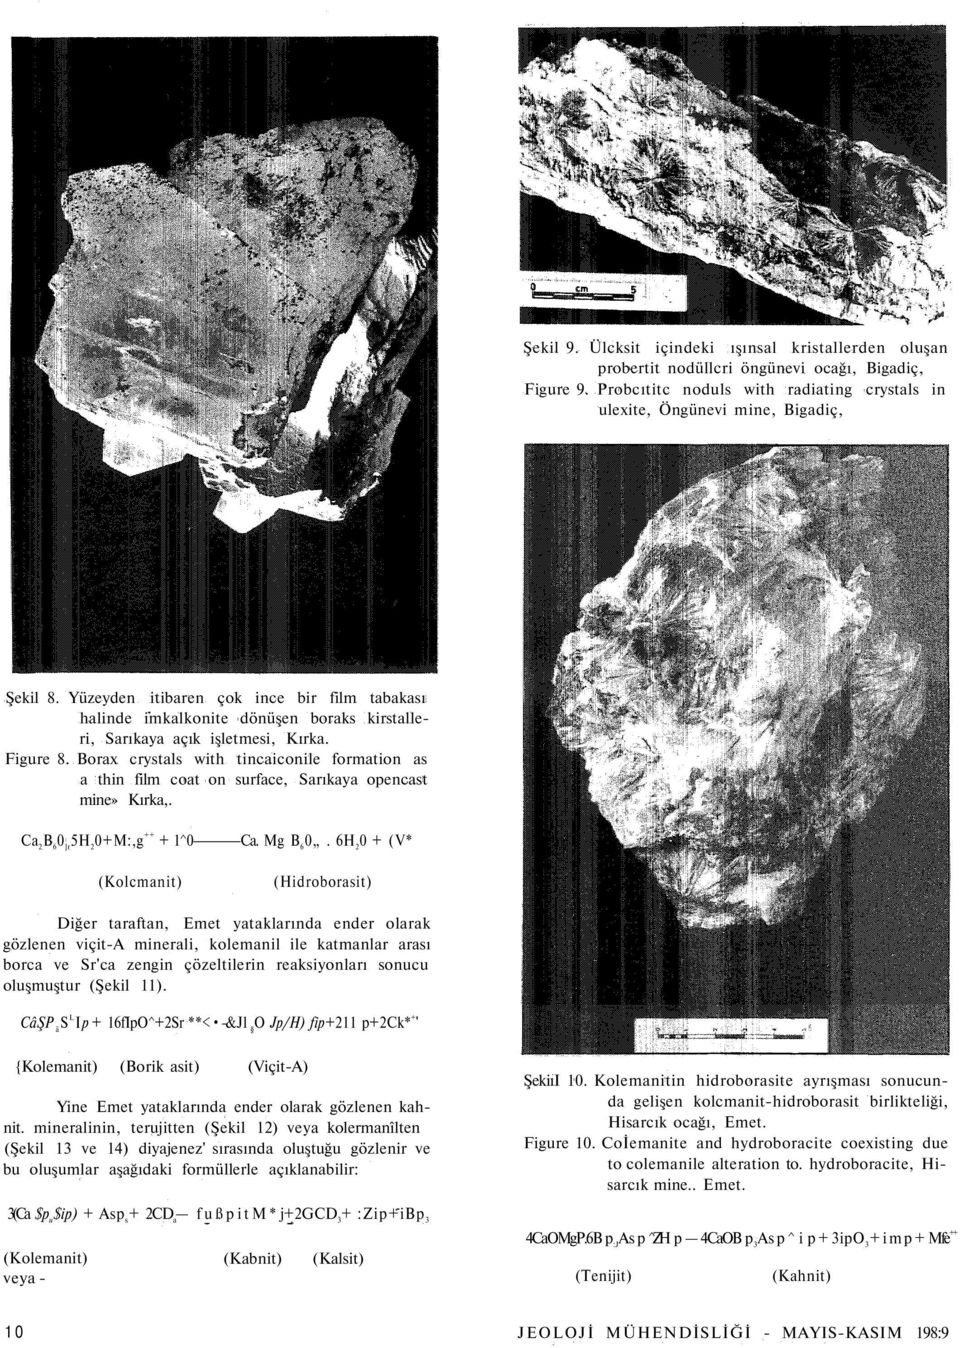 Borax crystals with tincaiconile formation as a thin film coat on surface, Sarıkaya opencast mine» Kırka,. ++ Ca 2 B 6 0 ]r 5H 2 0+M:,g + 1^0 (Kolcmanit) Ca. Mg B 6 0.